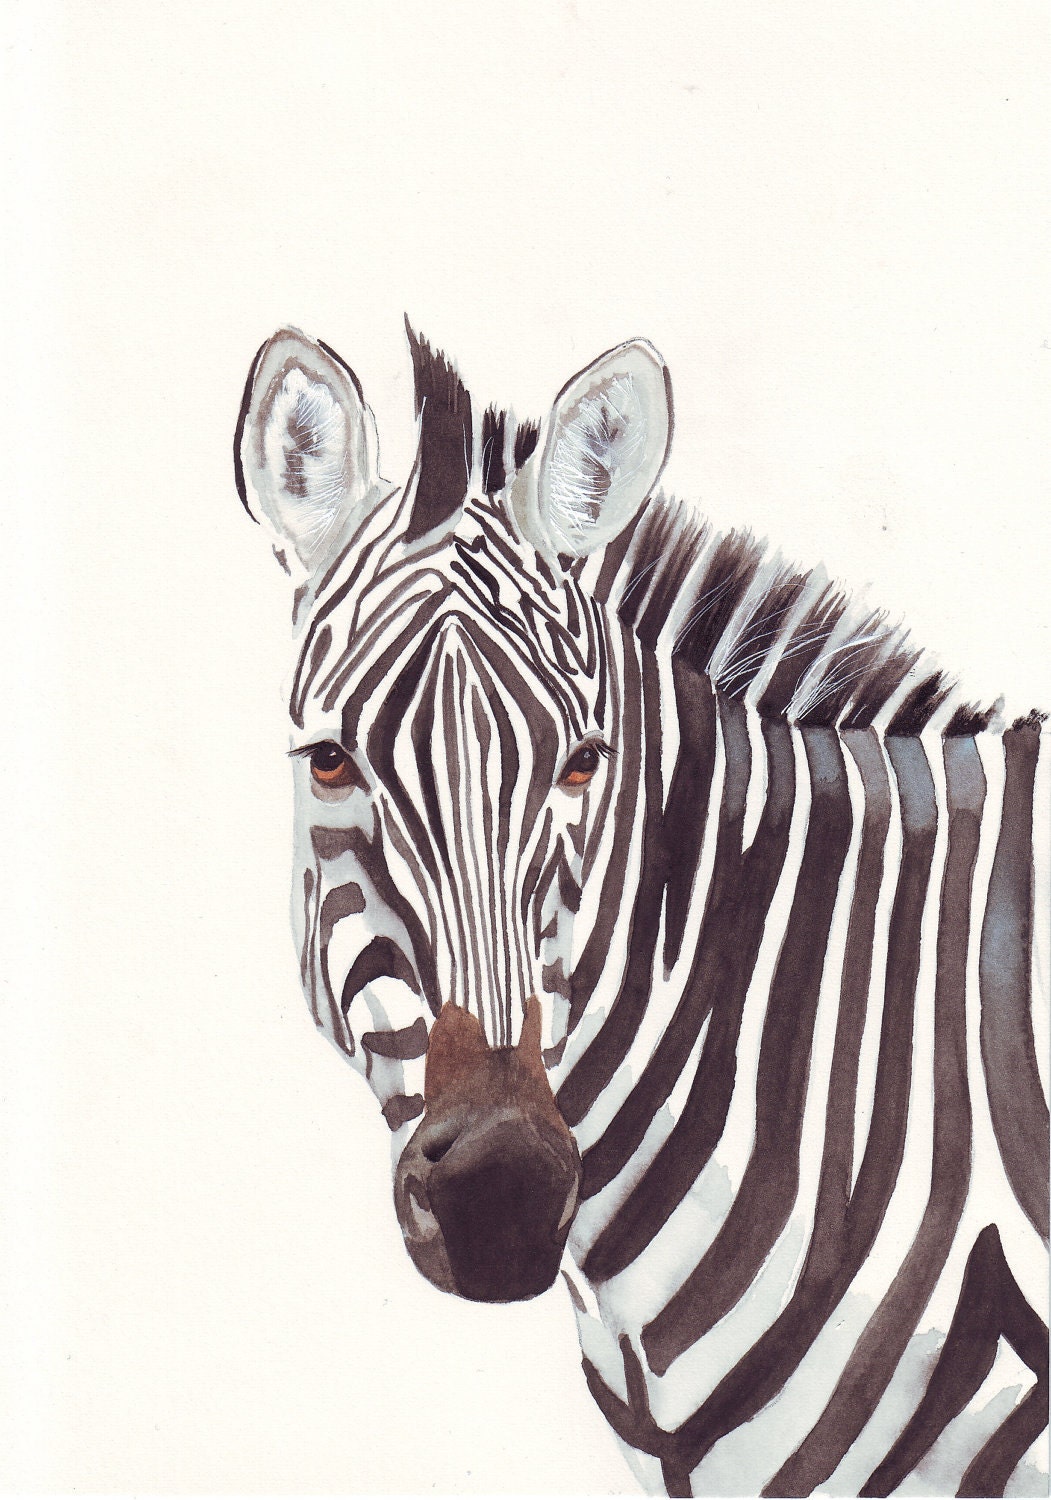 Zebra ART No. 065 Zoo animal art  Large Print of watercolor painting